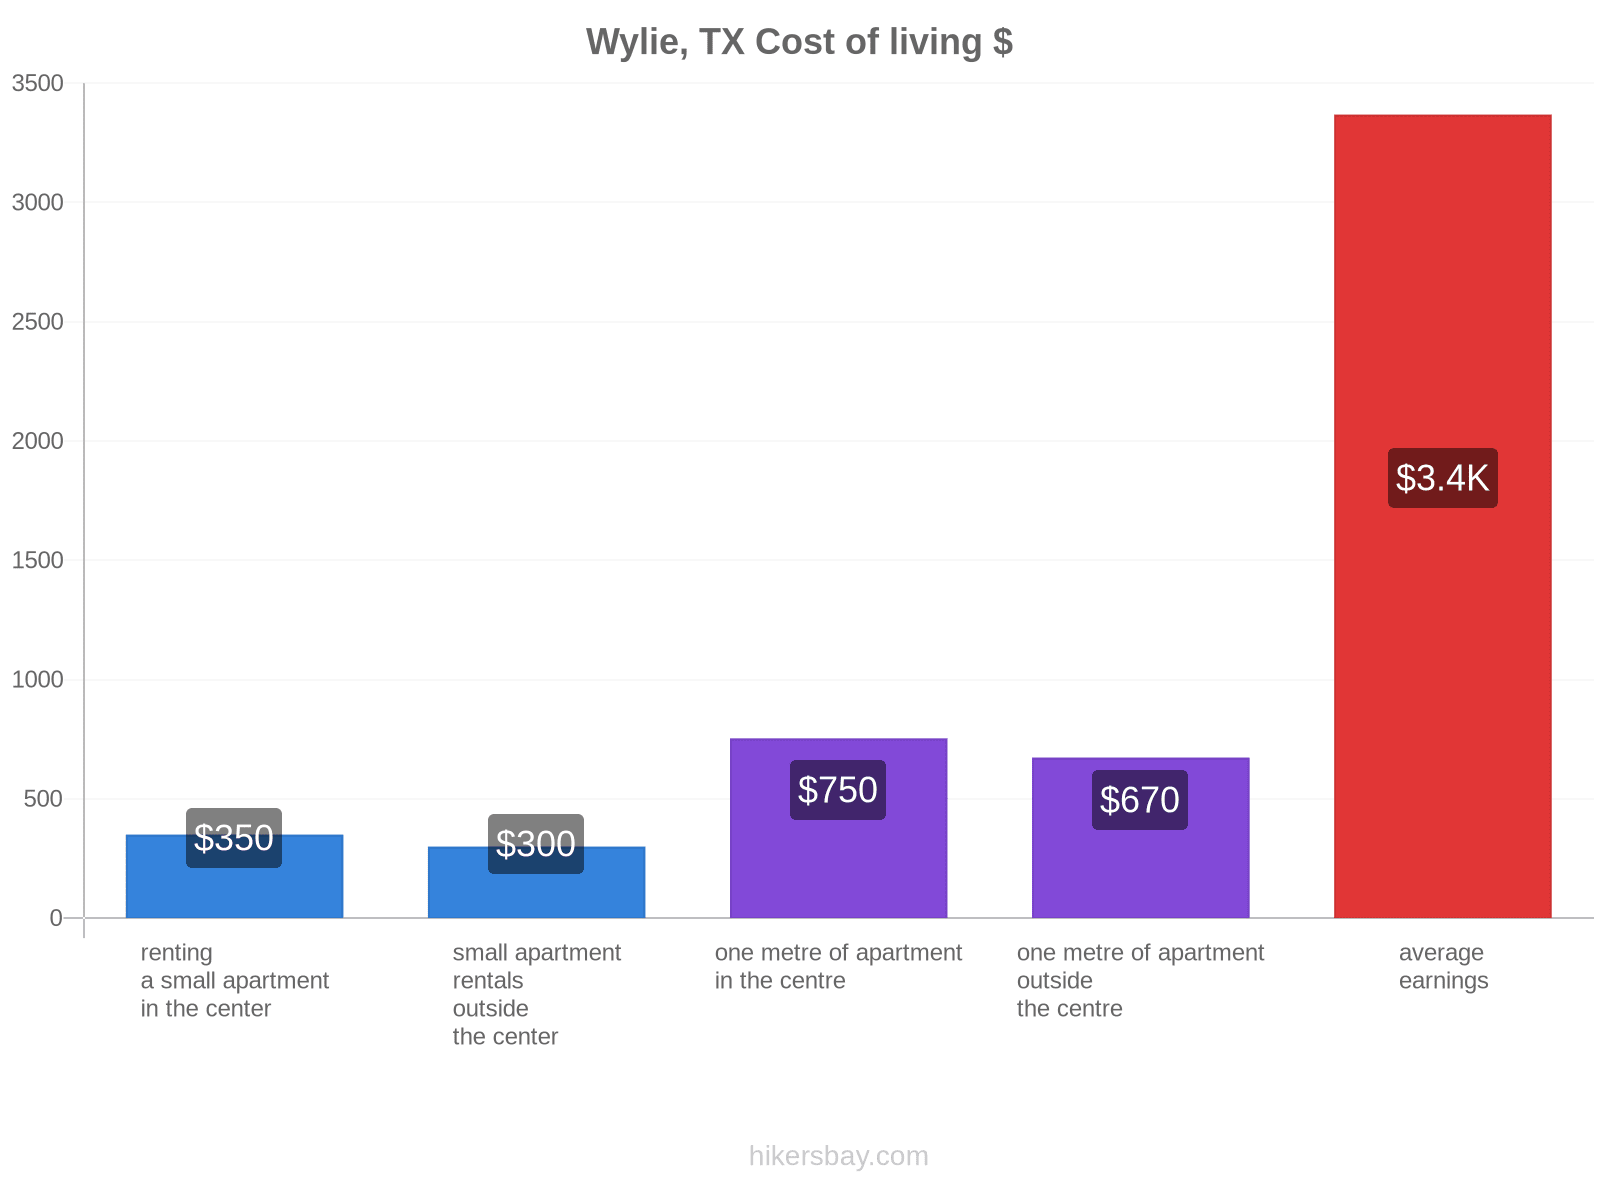 Wylie, TX cost of living hikersbay.com